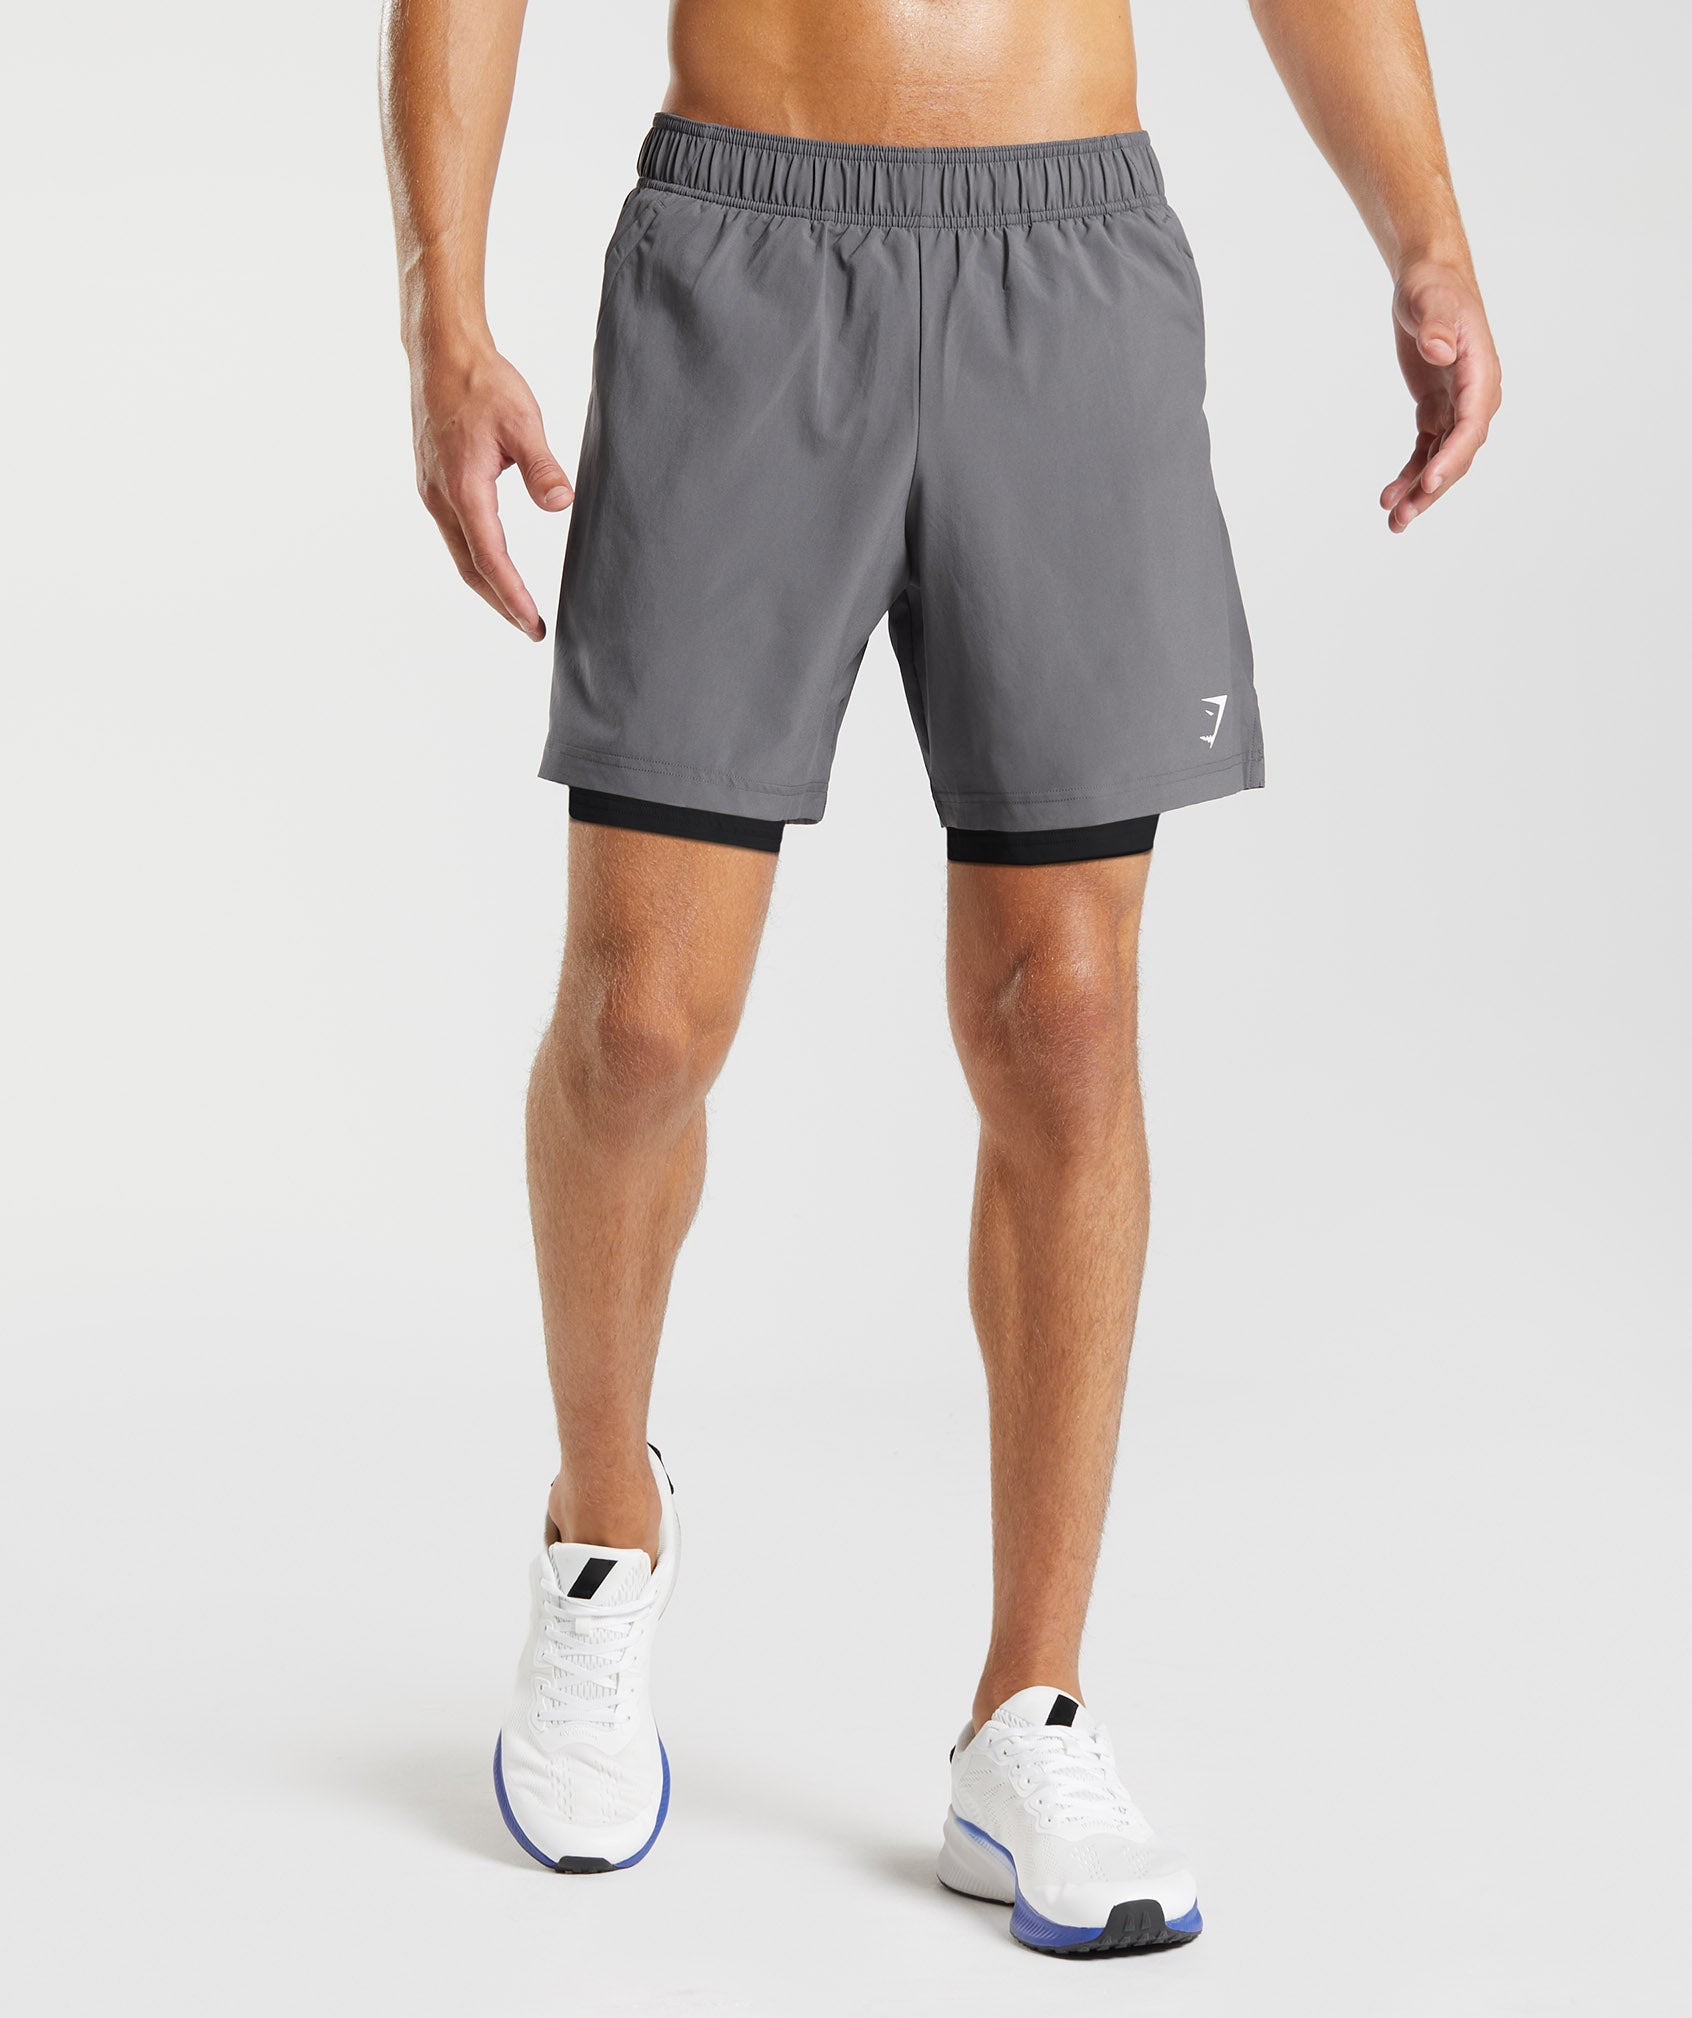 Men's Grey Gym & Workout Shorts - Gymshark